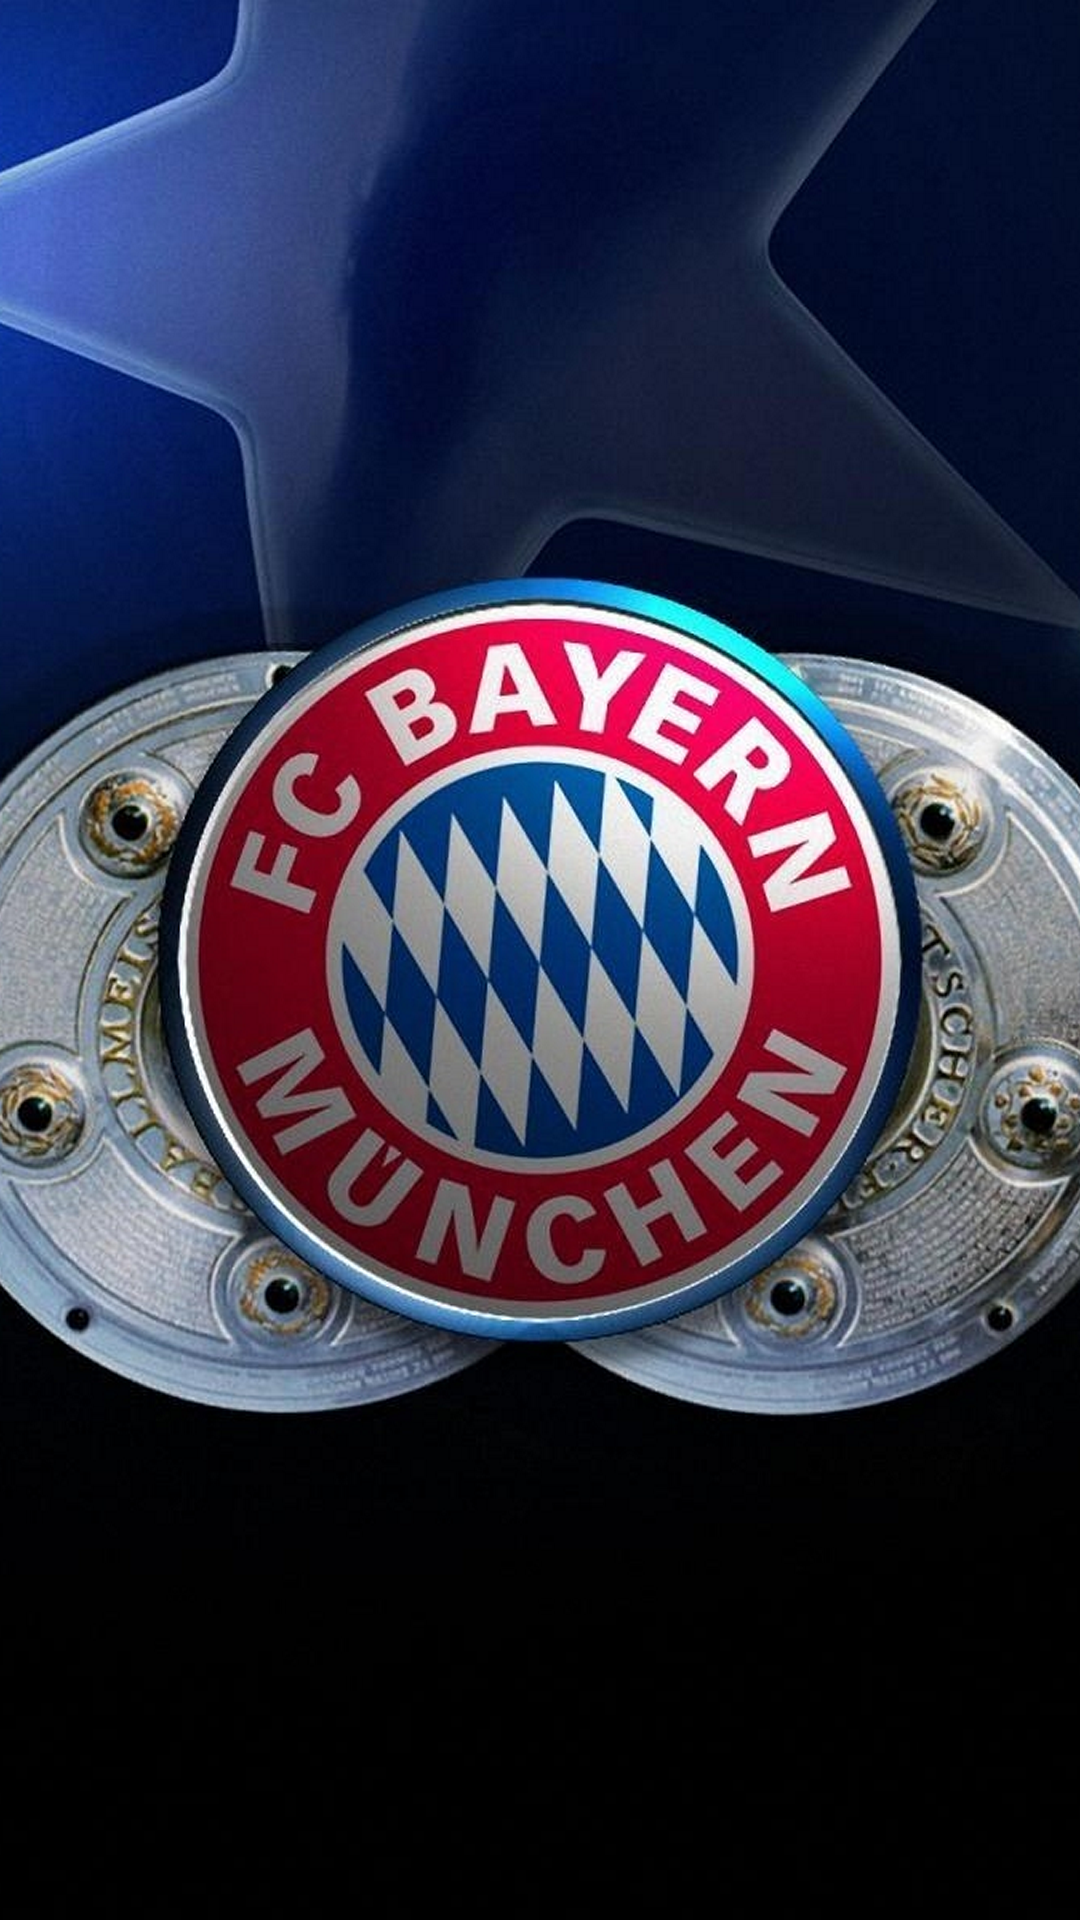 Wallpaper for Galaxy Bayern Munchen Logo